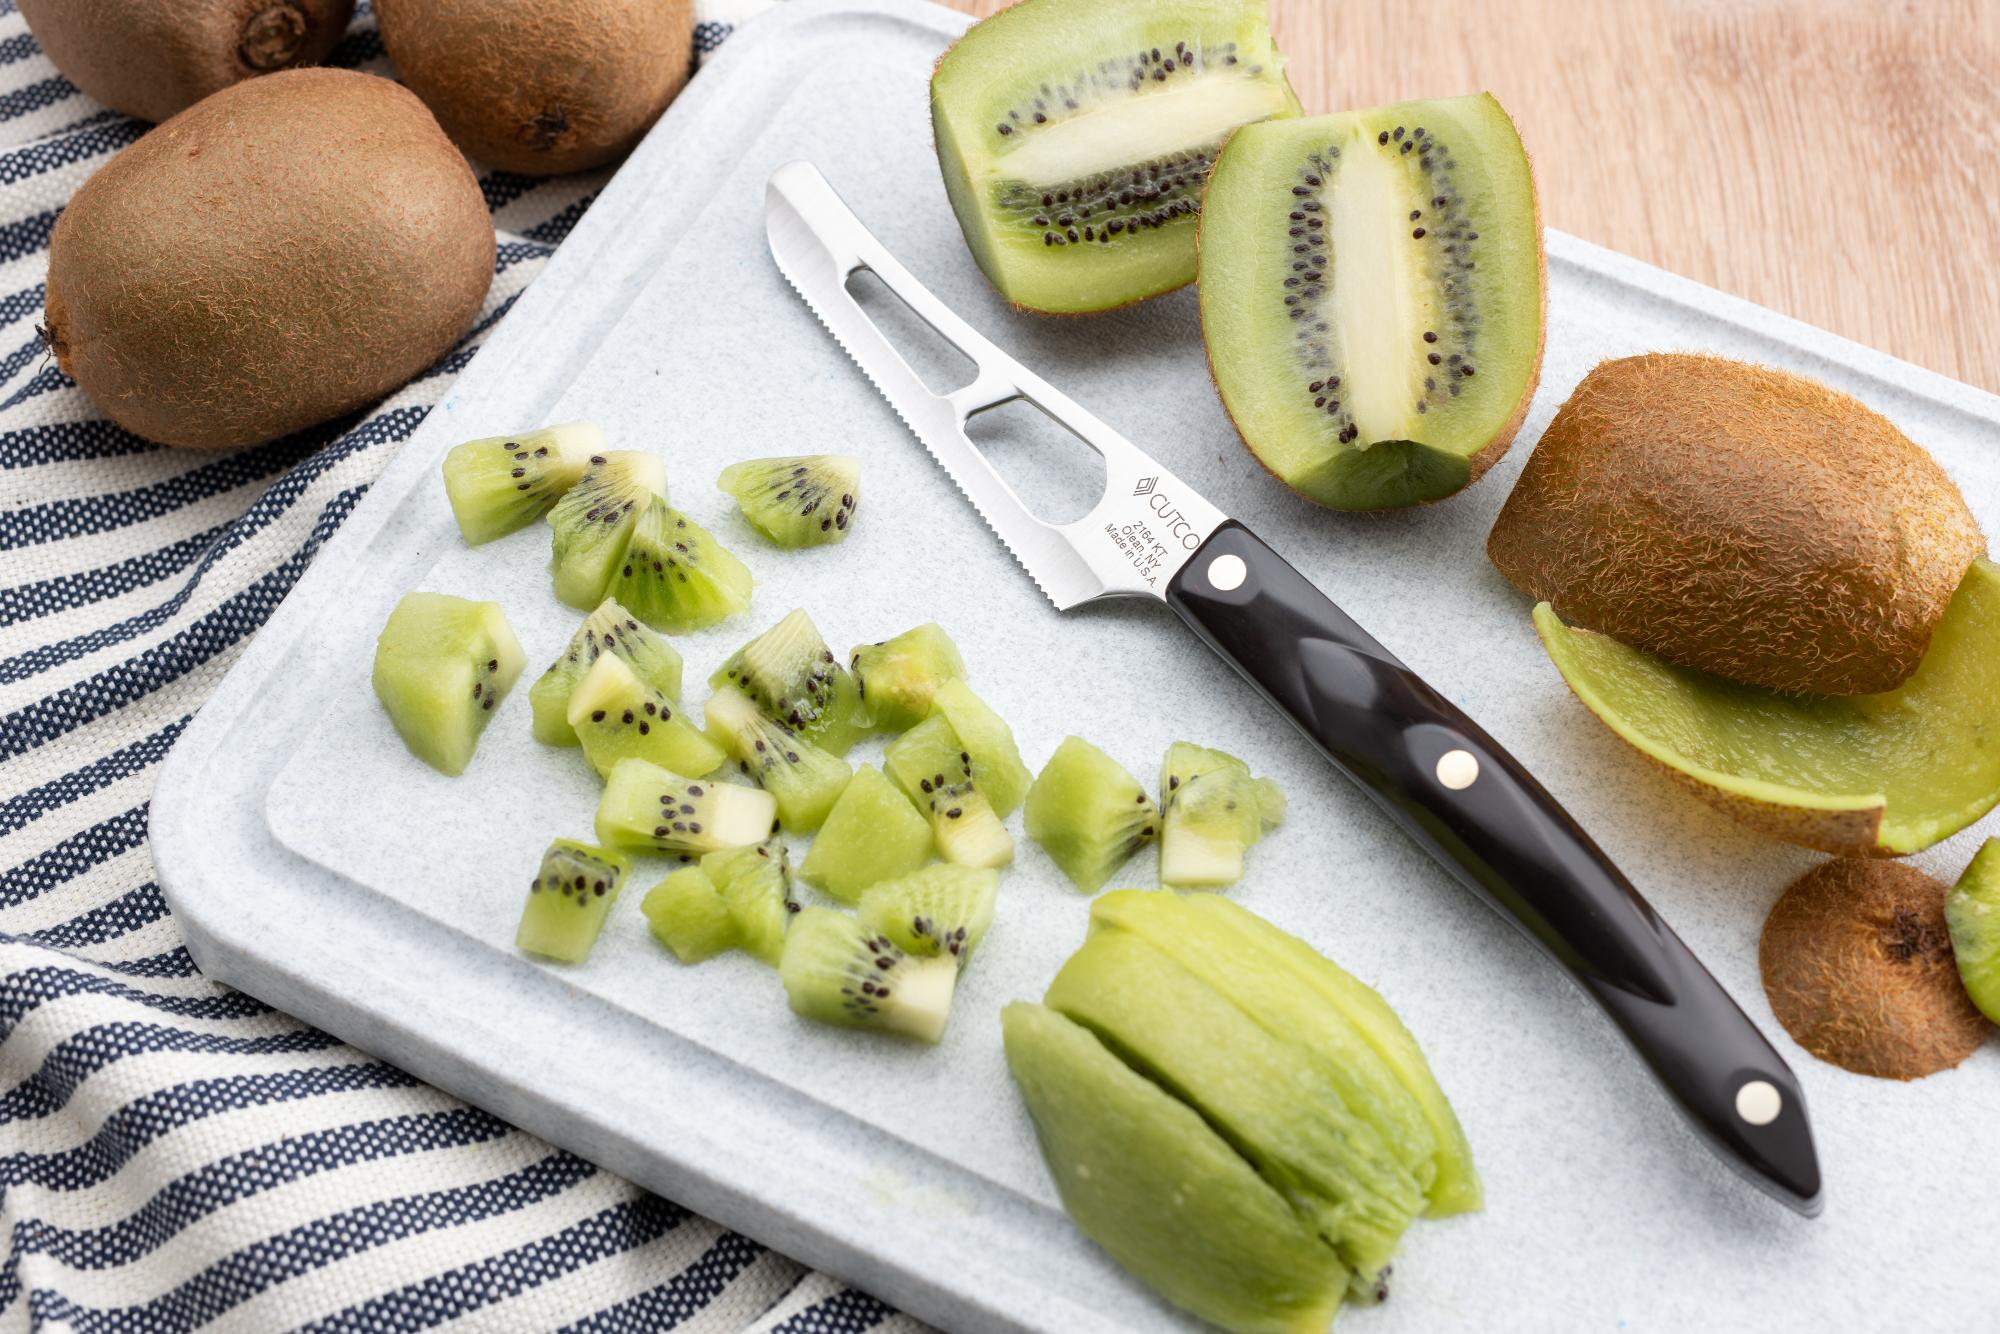 How to Cut a Kiwi or Kiwifruit